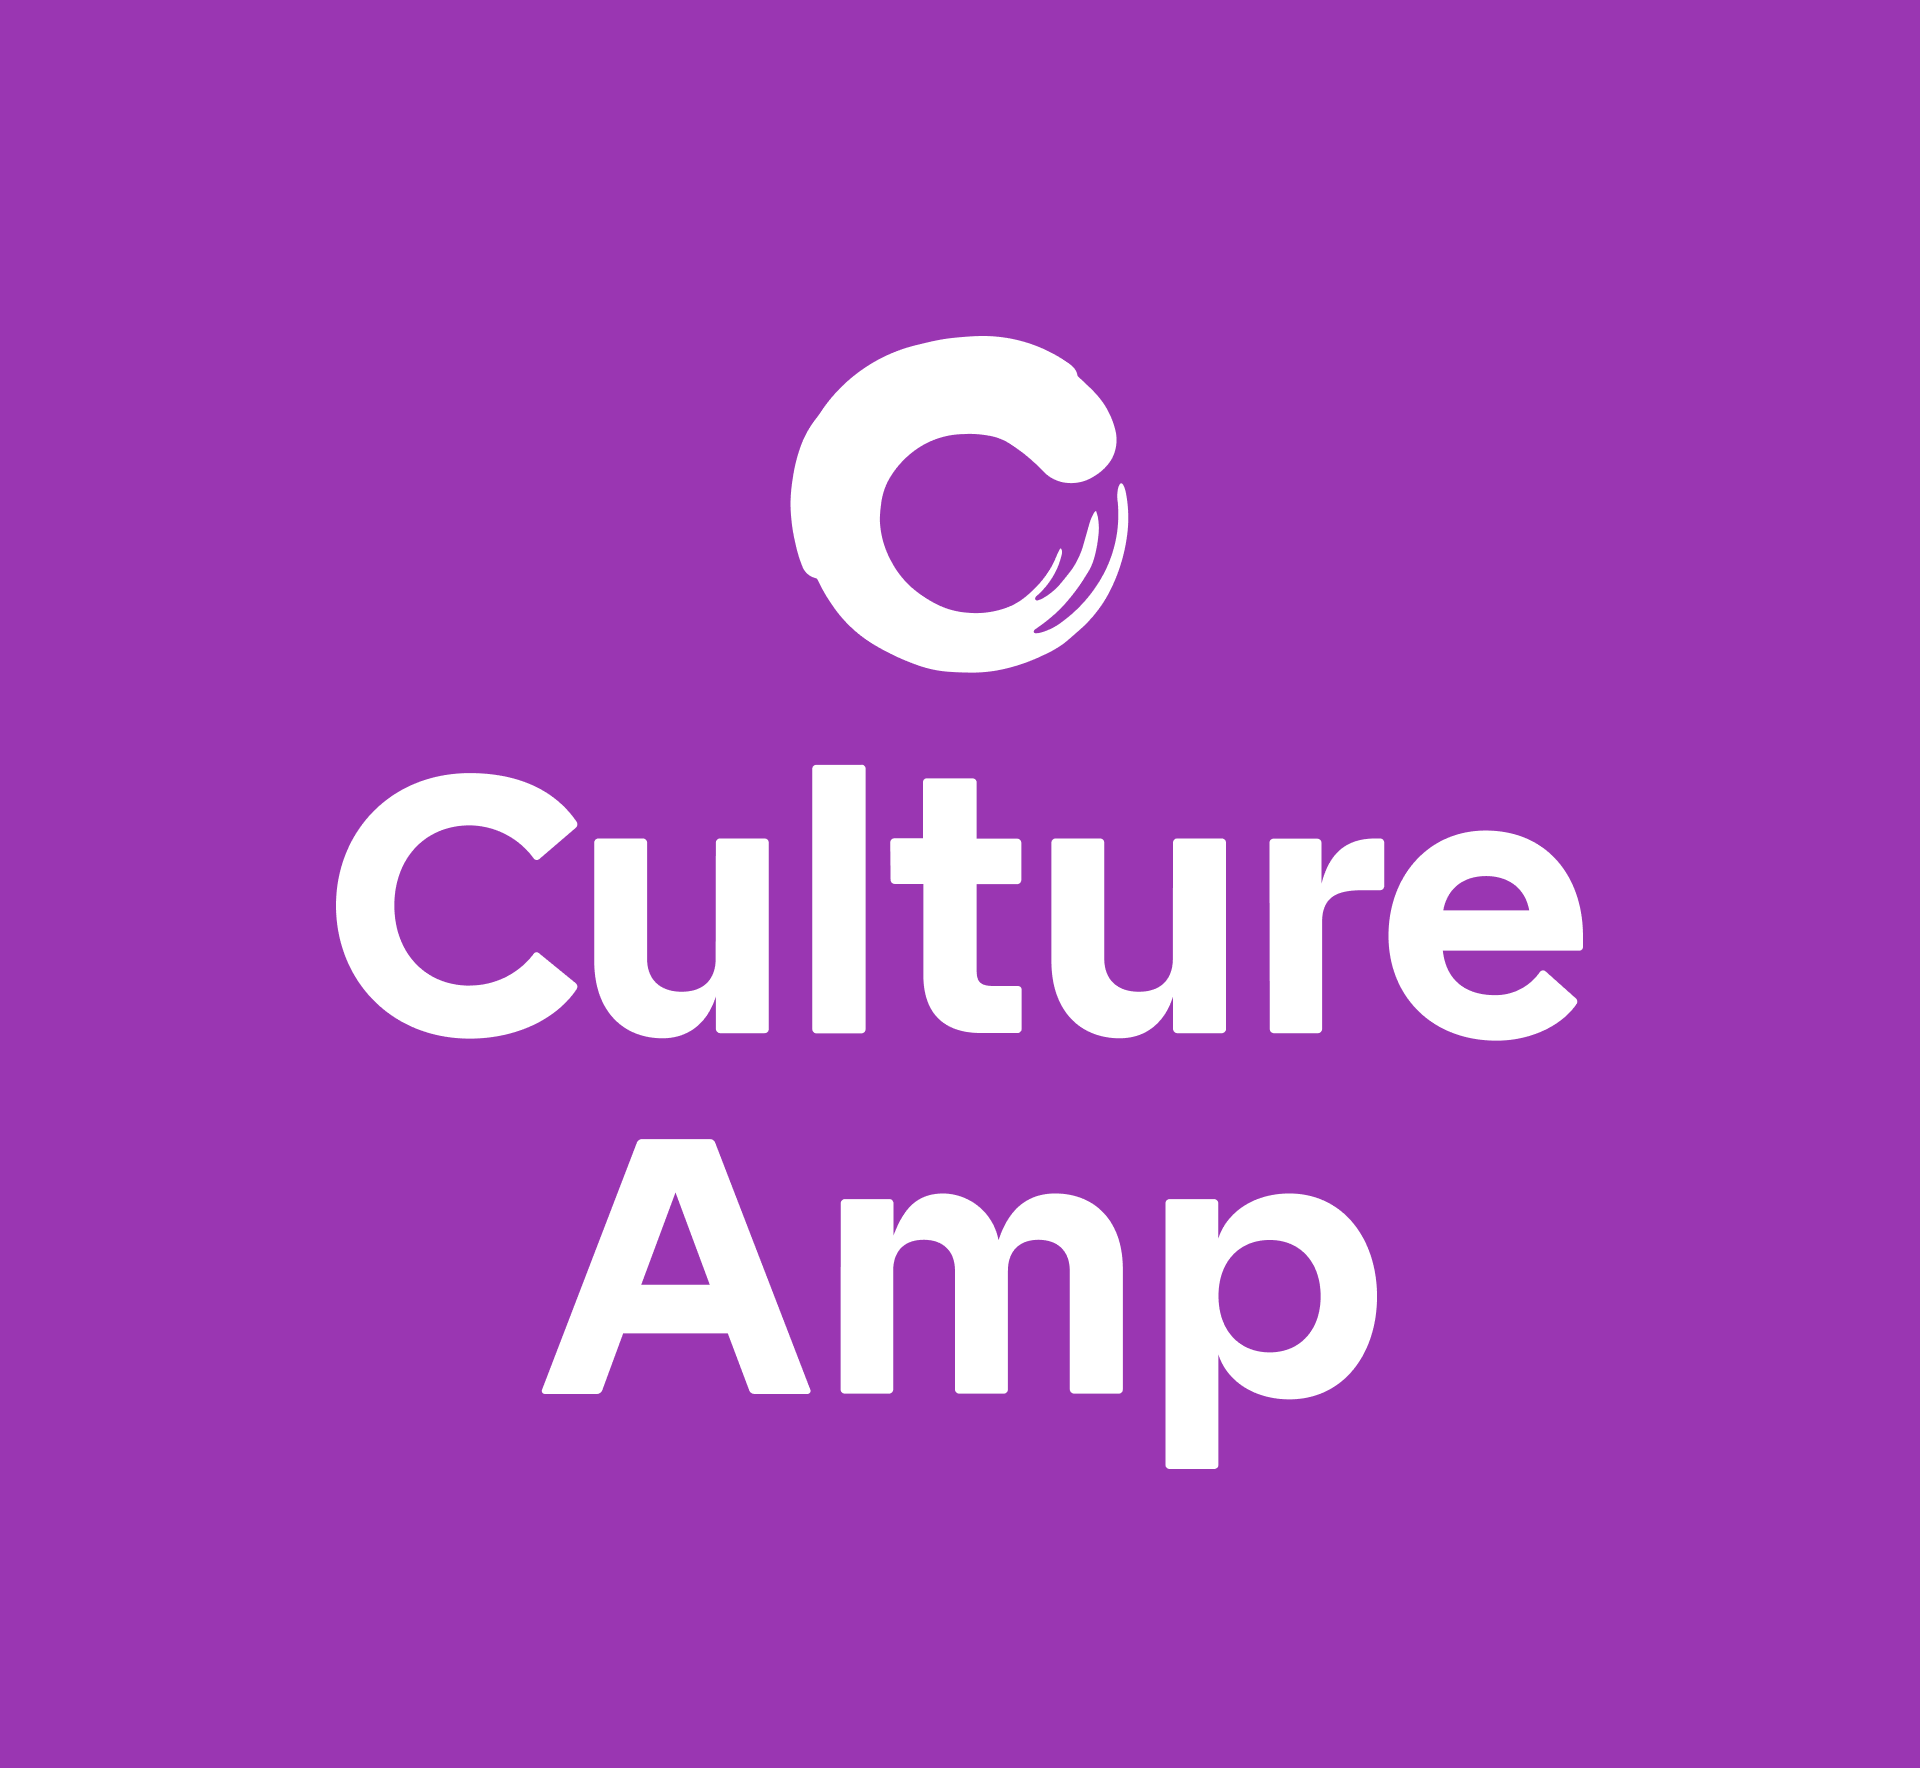 Culture Amp acquires values recognition platform Disco